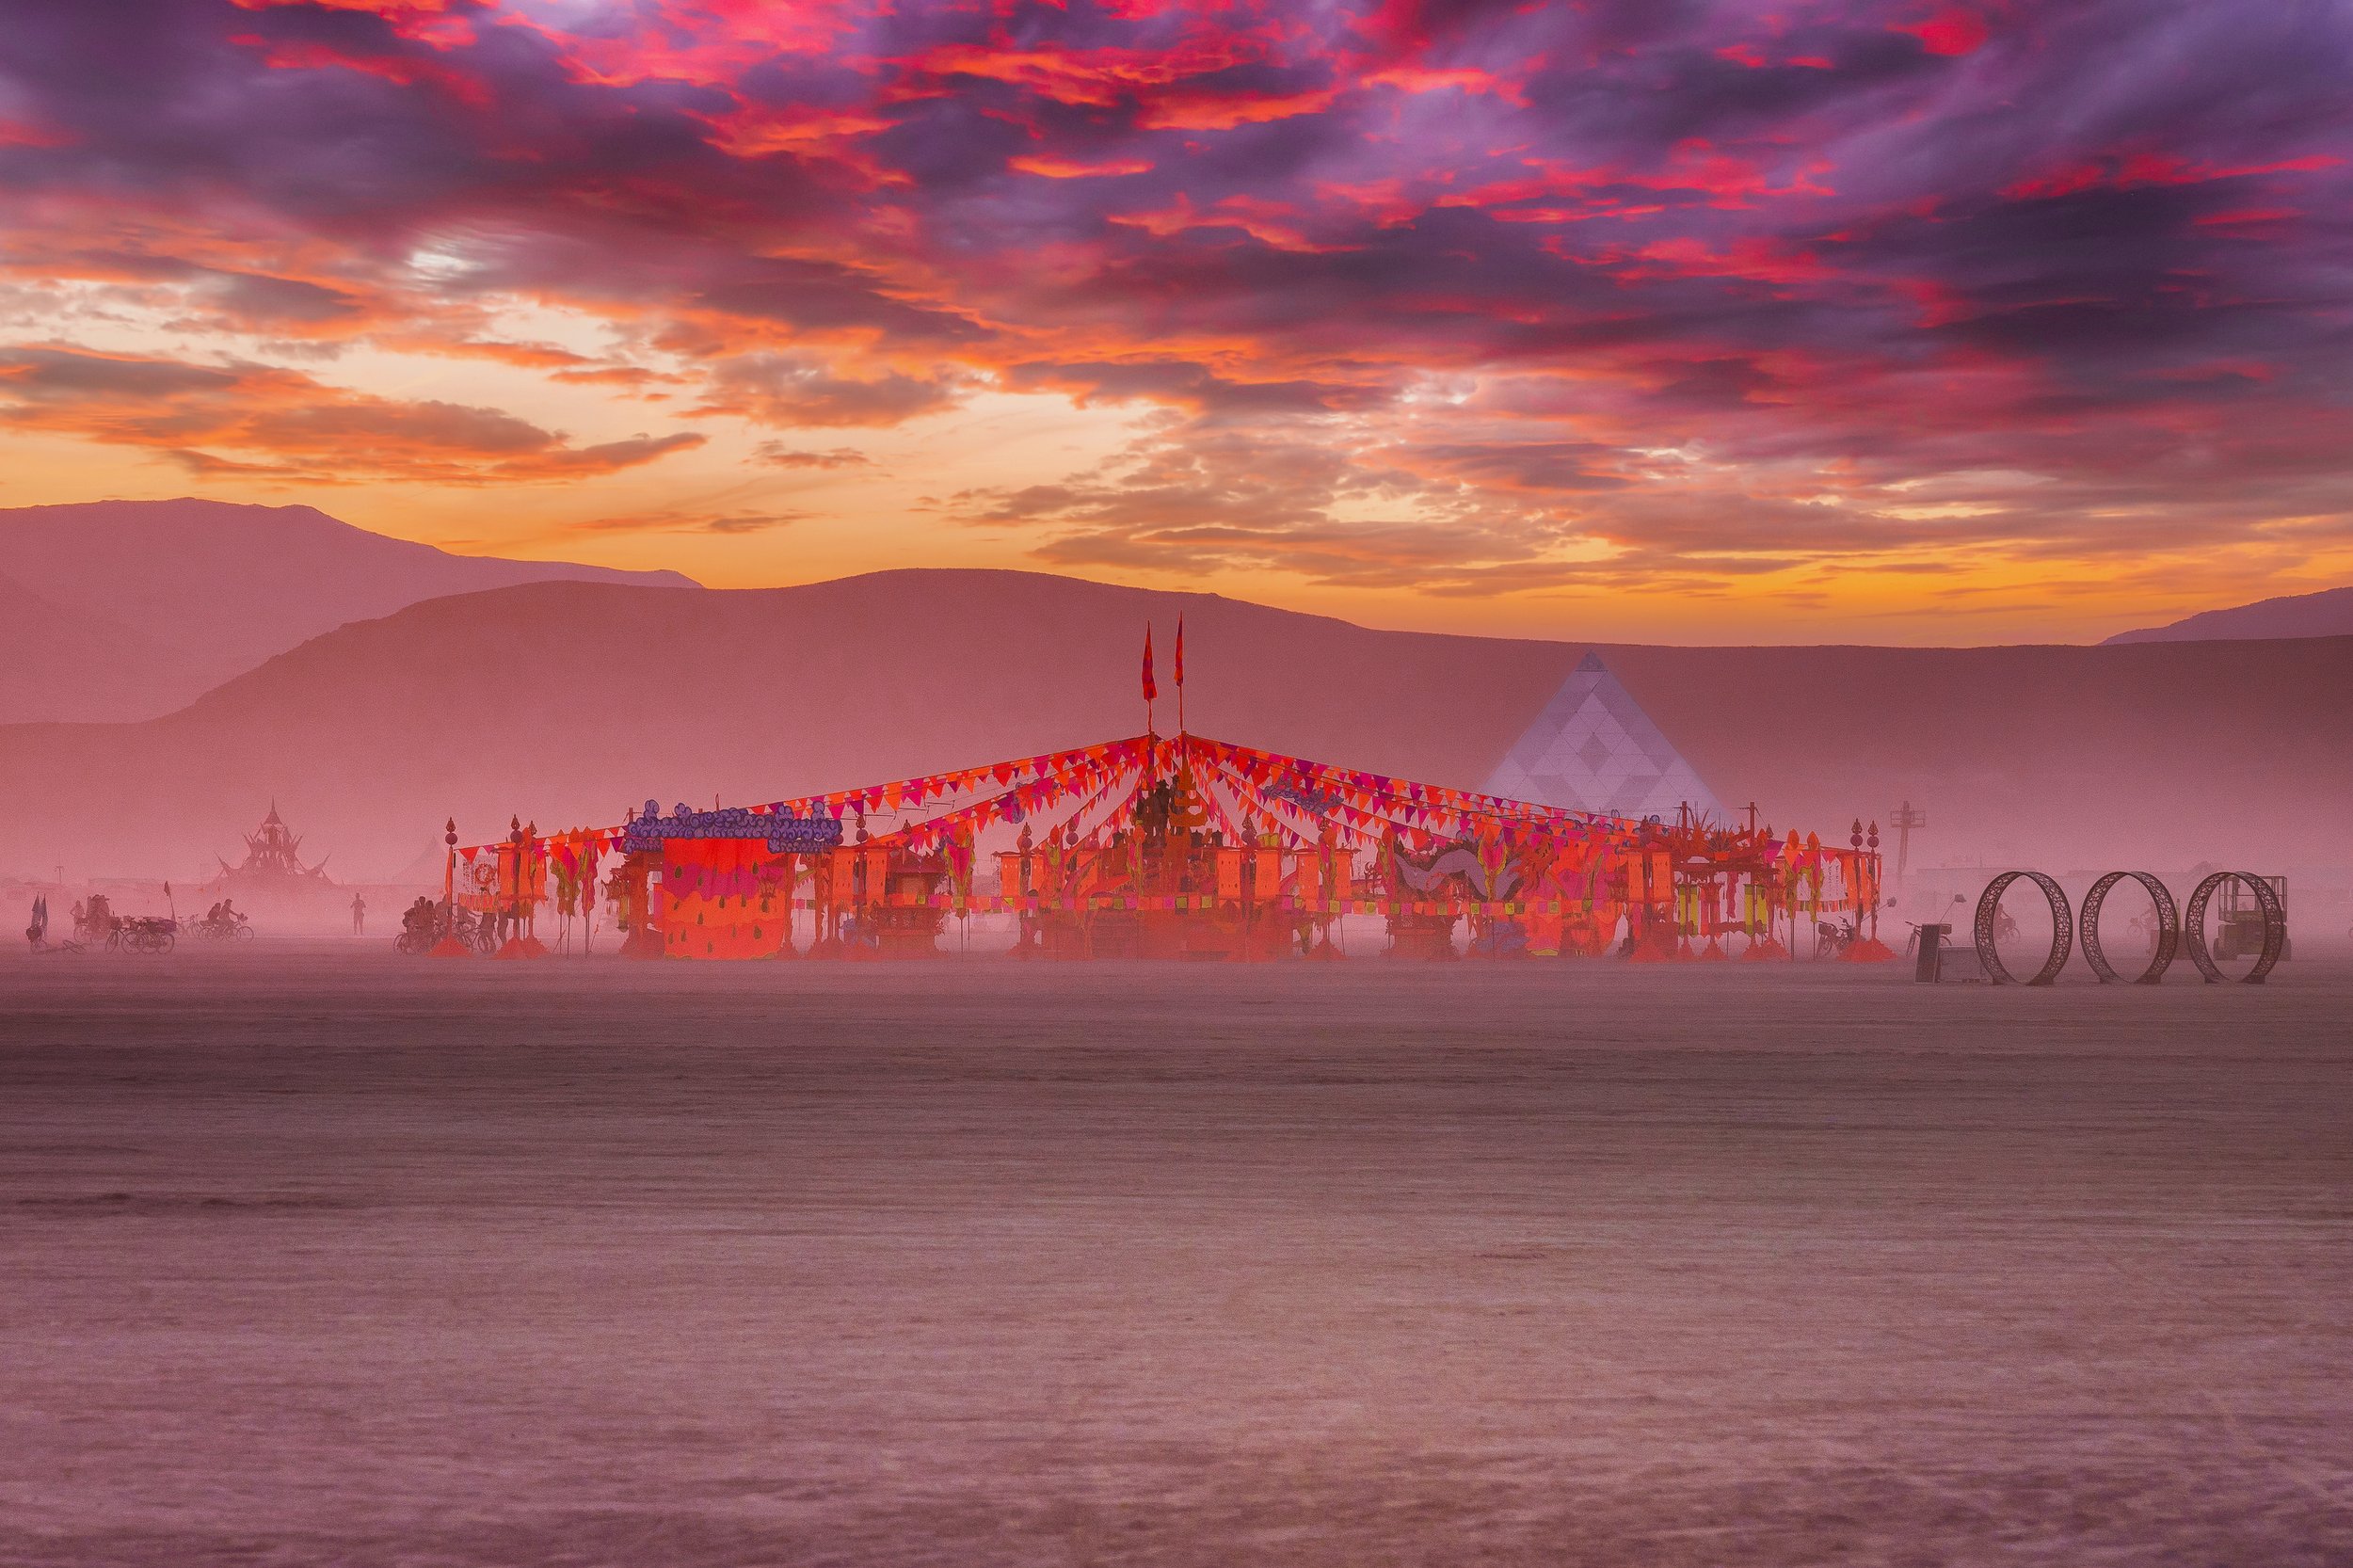 Burning Man 2022 - The Afterlife